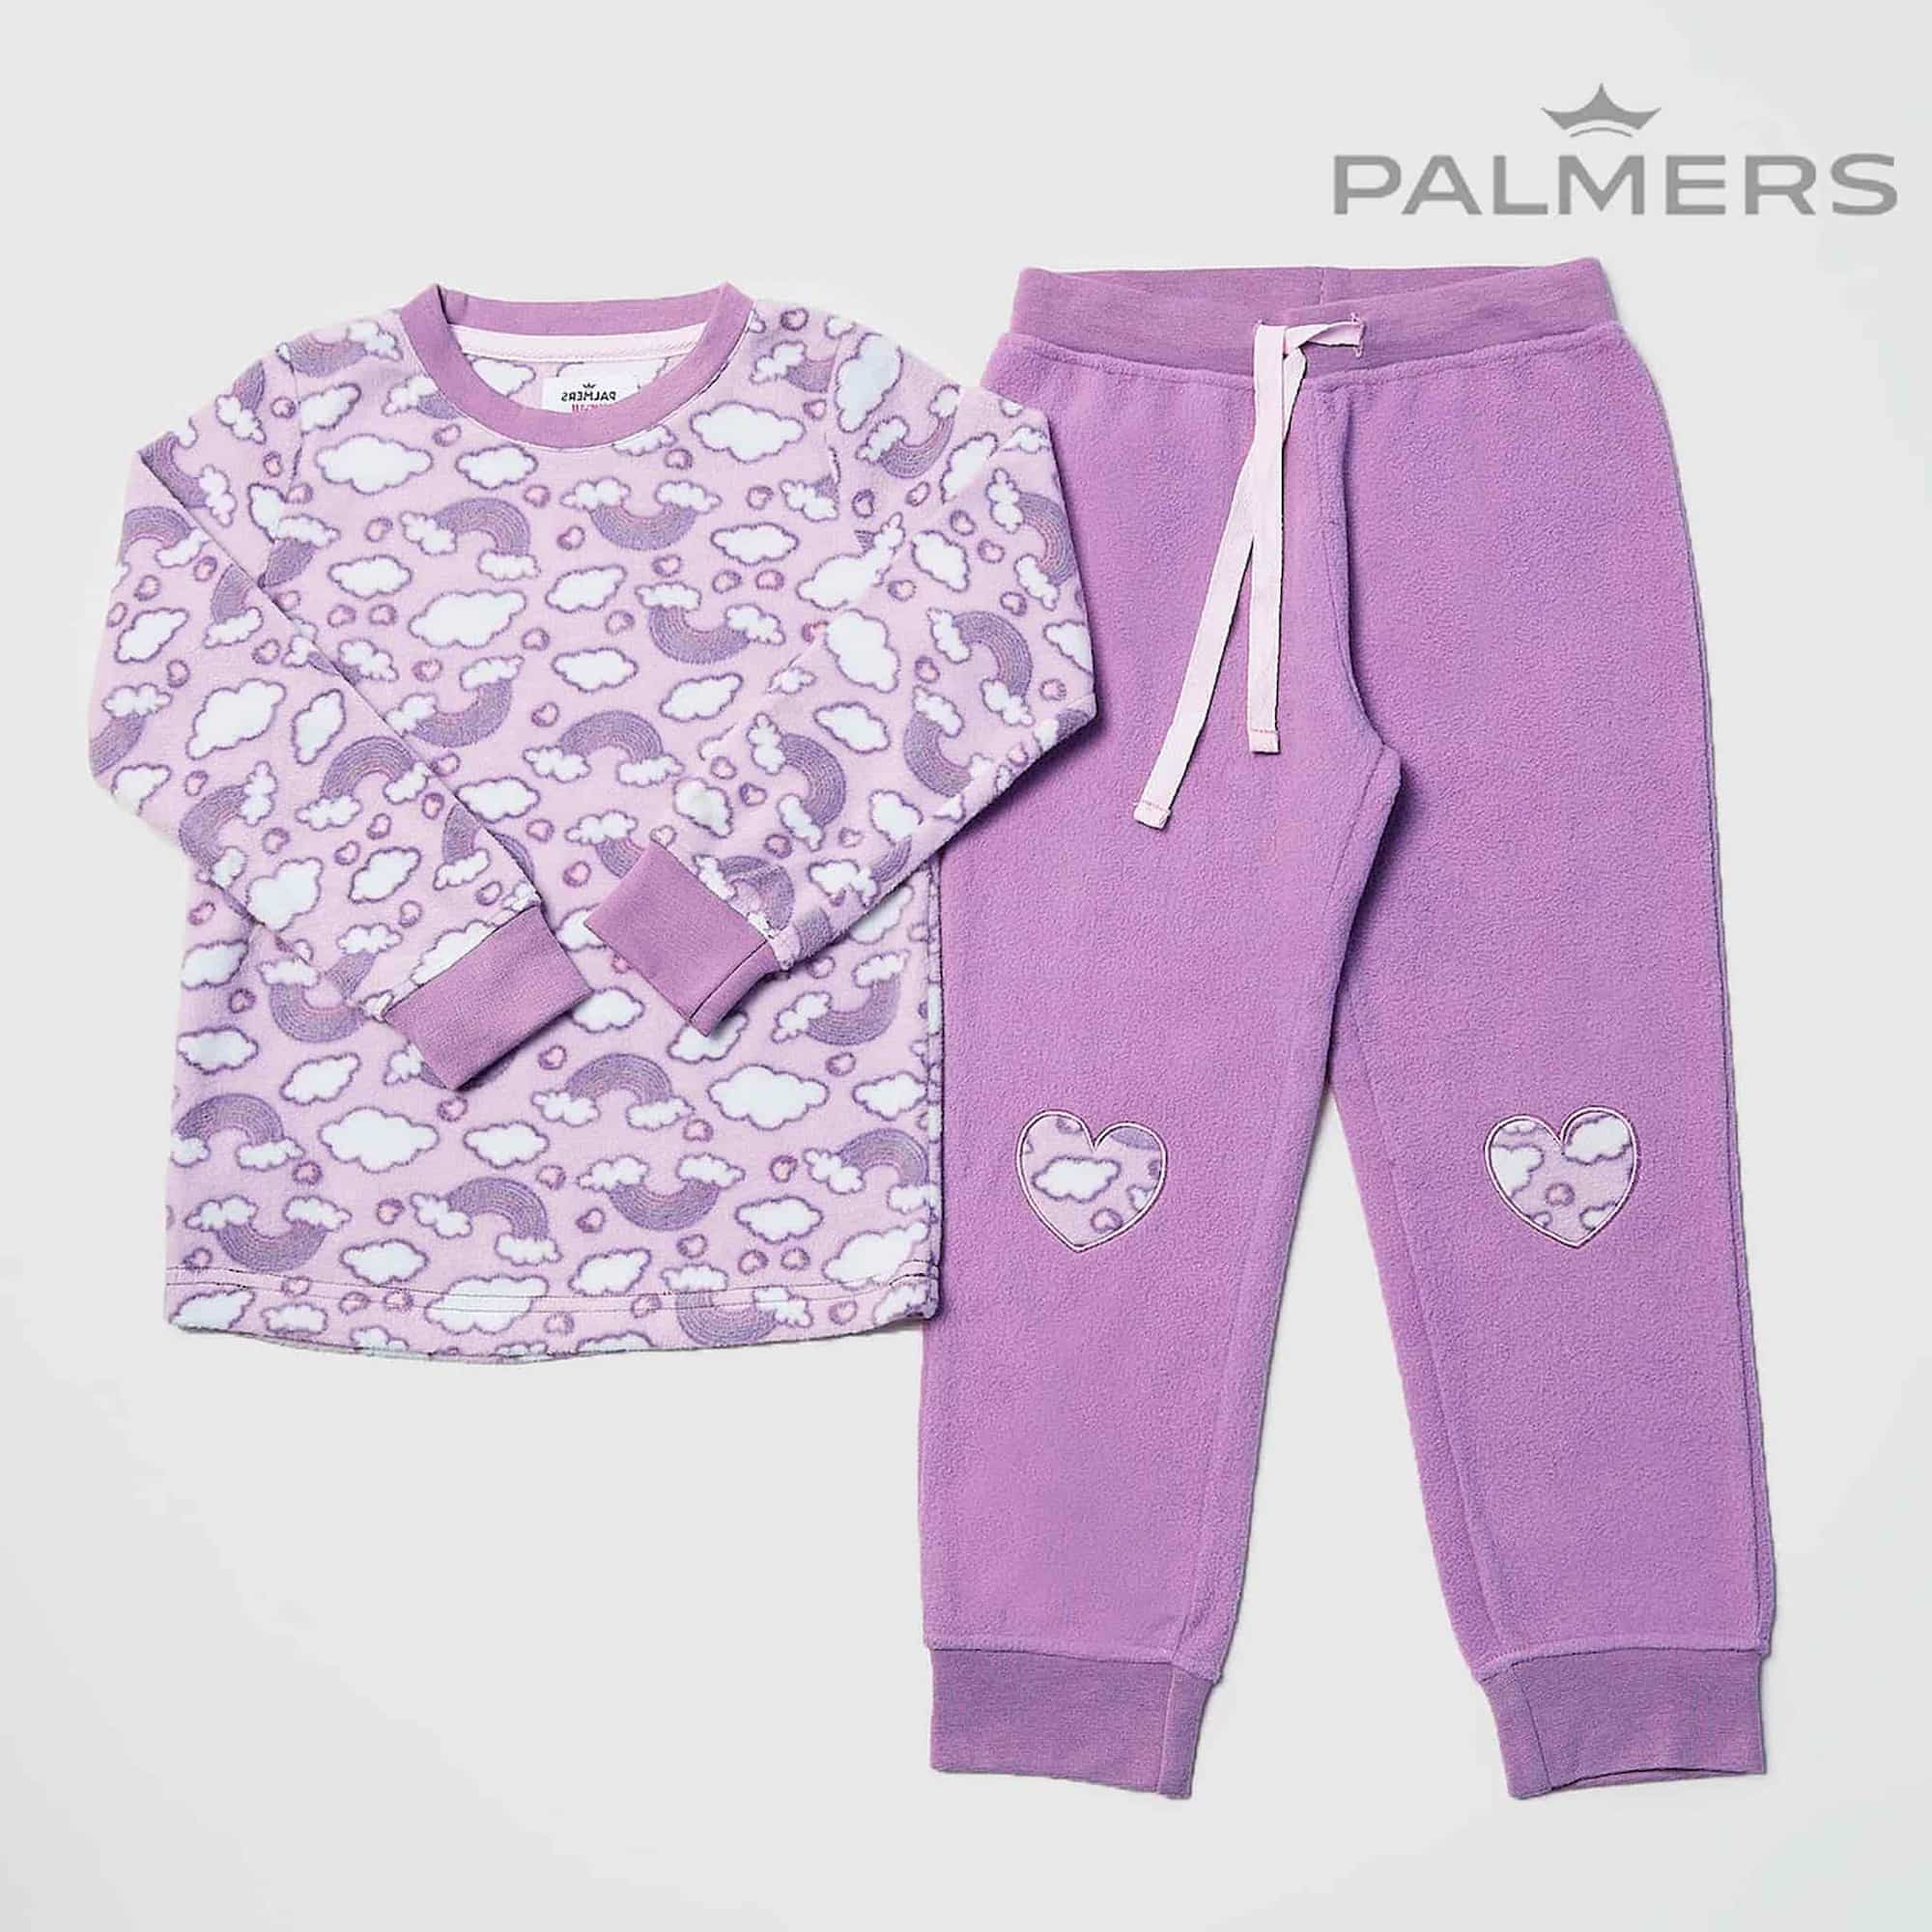 67228-Pijama-Palmers-Micropolar-Lila